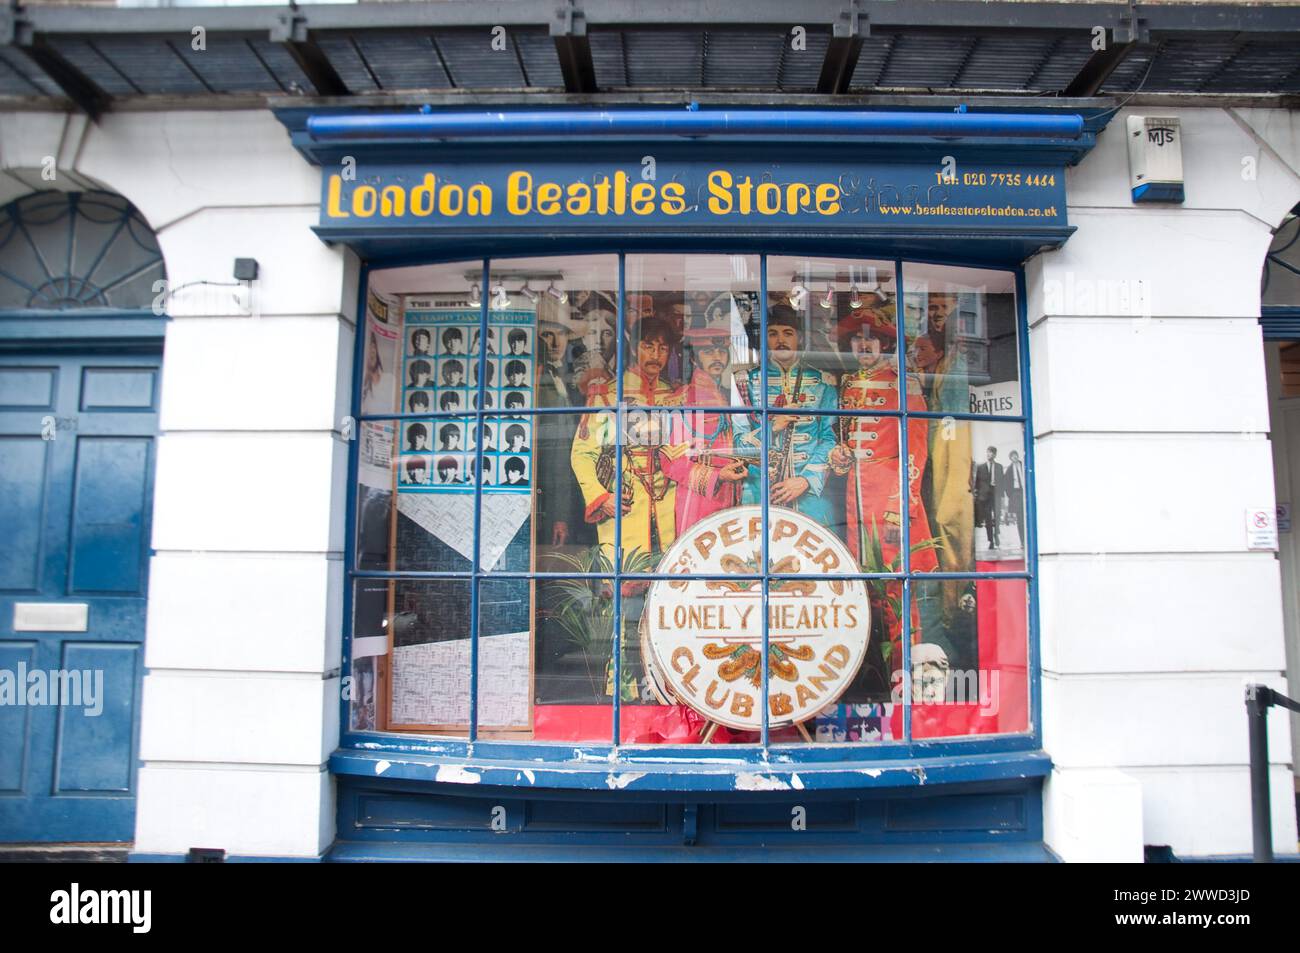 London Beatles Store, Baker Street, London, UK Stock Photo